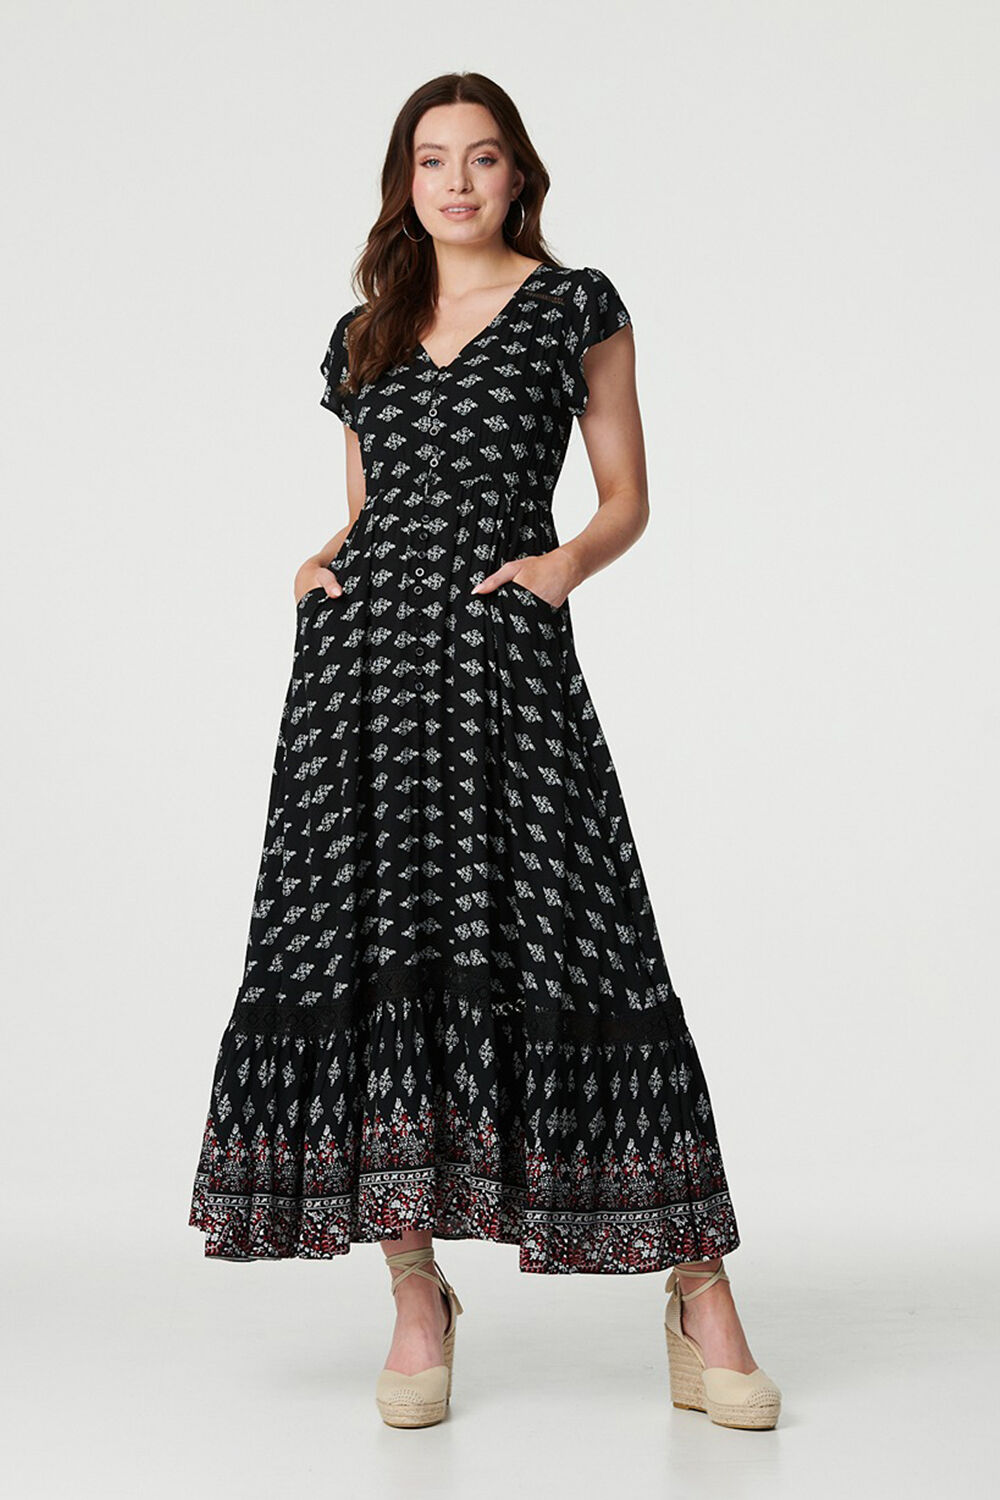 Izabel London Black - Printed V-Neck Lace Hem Maxi Dress, Size: 14